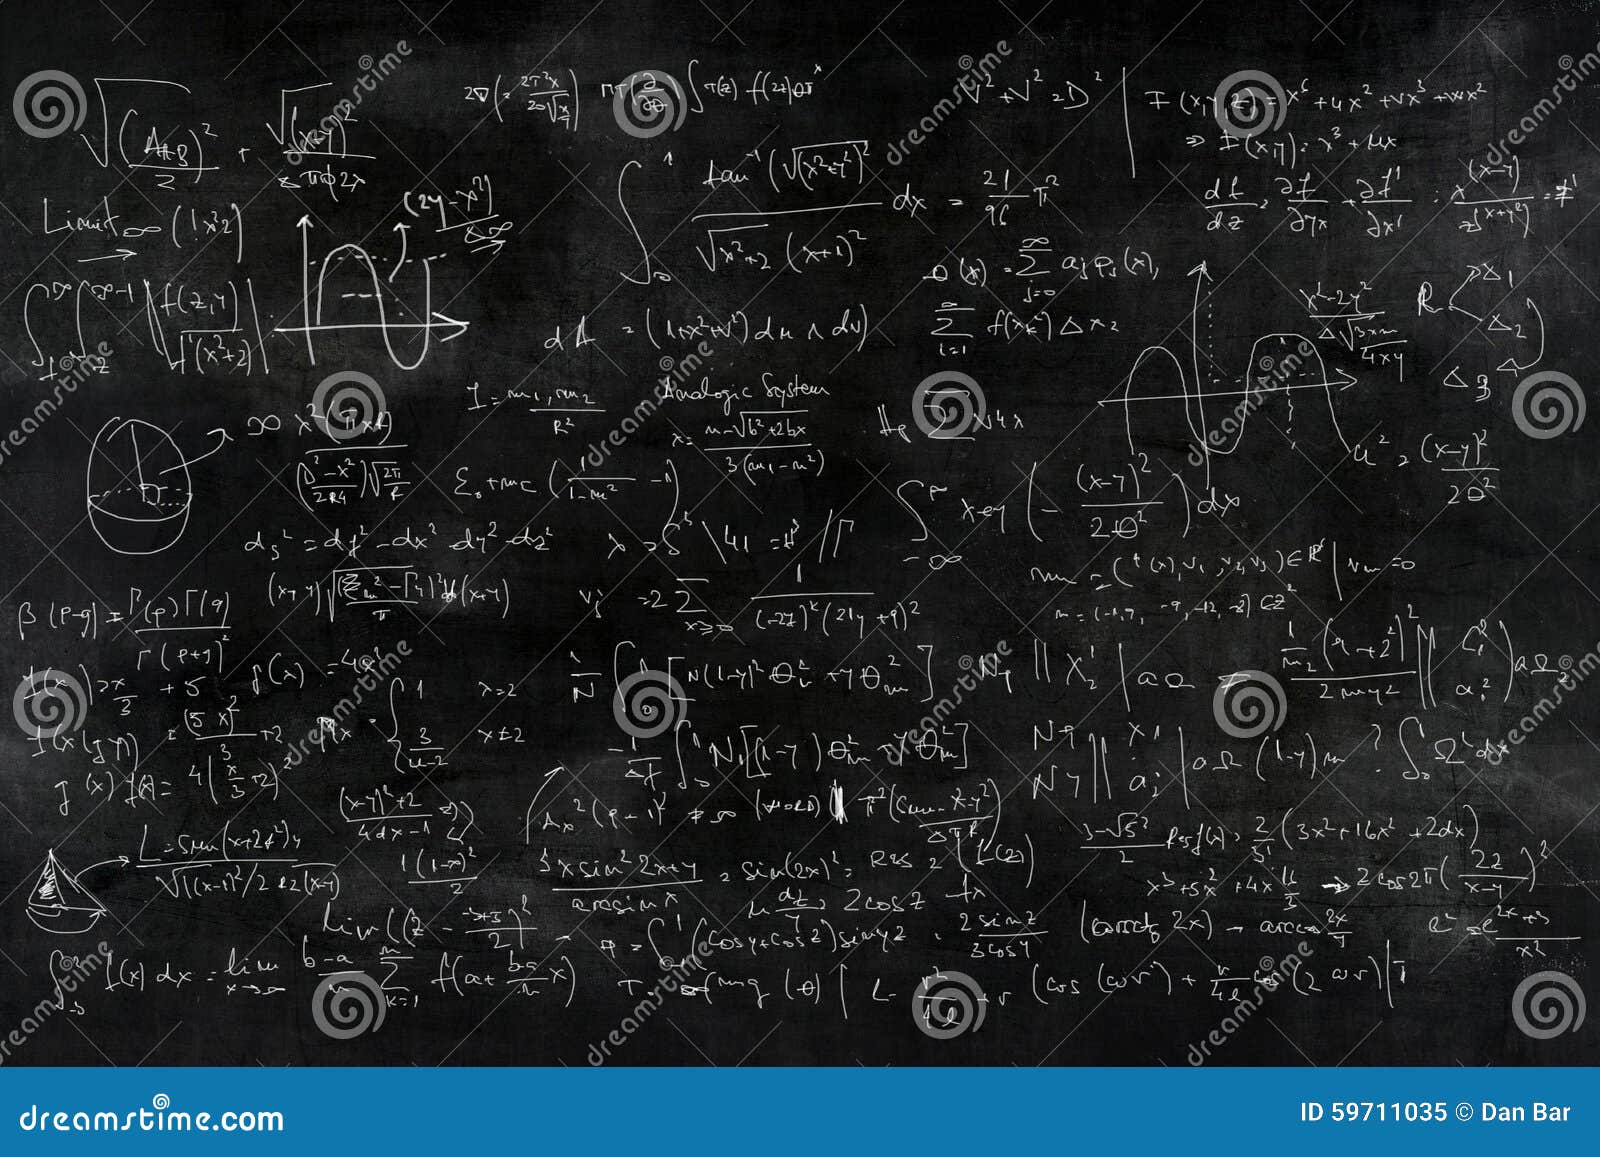 mathematics equations blackboard